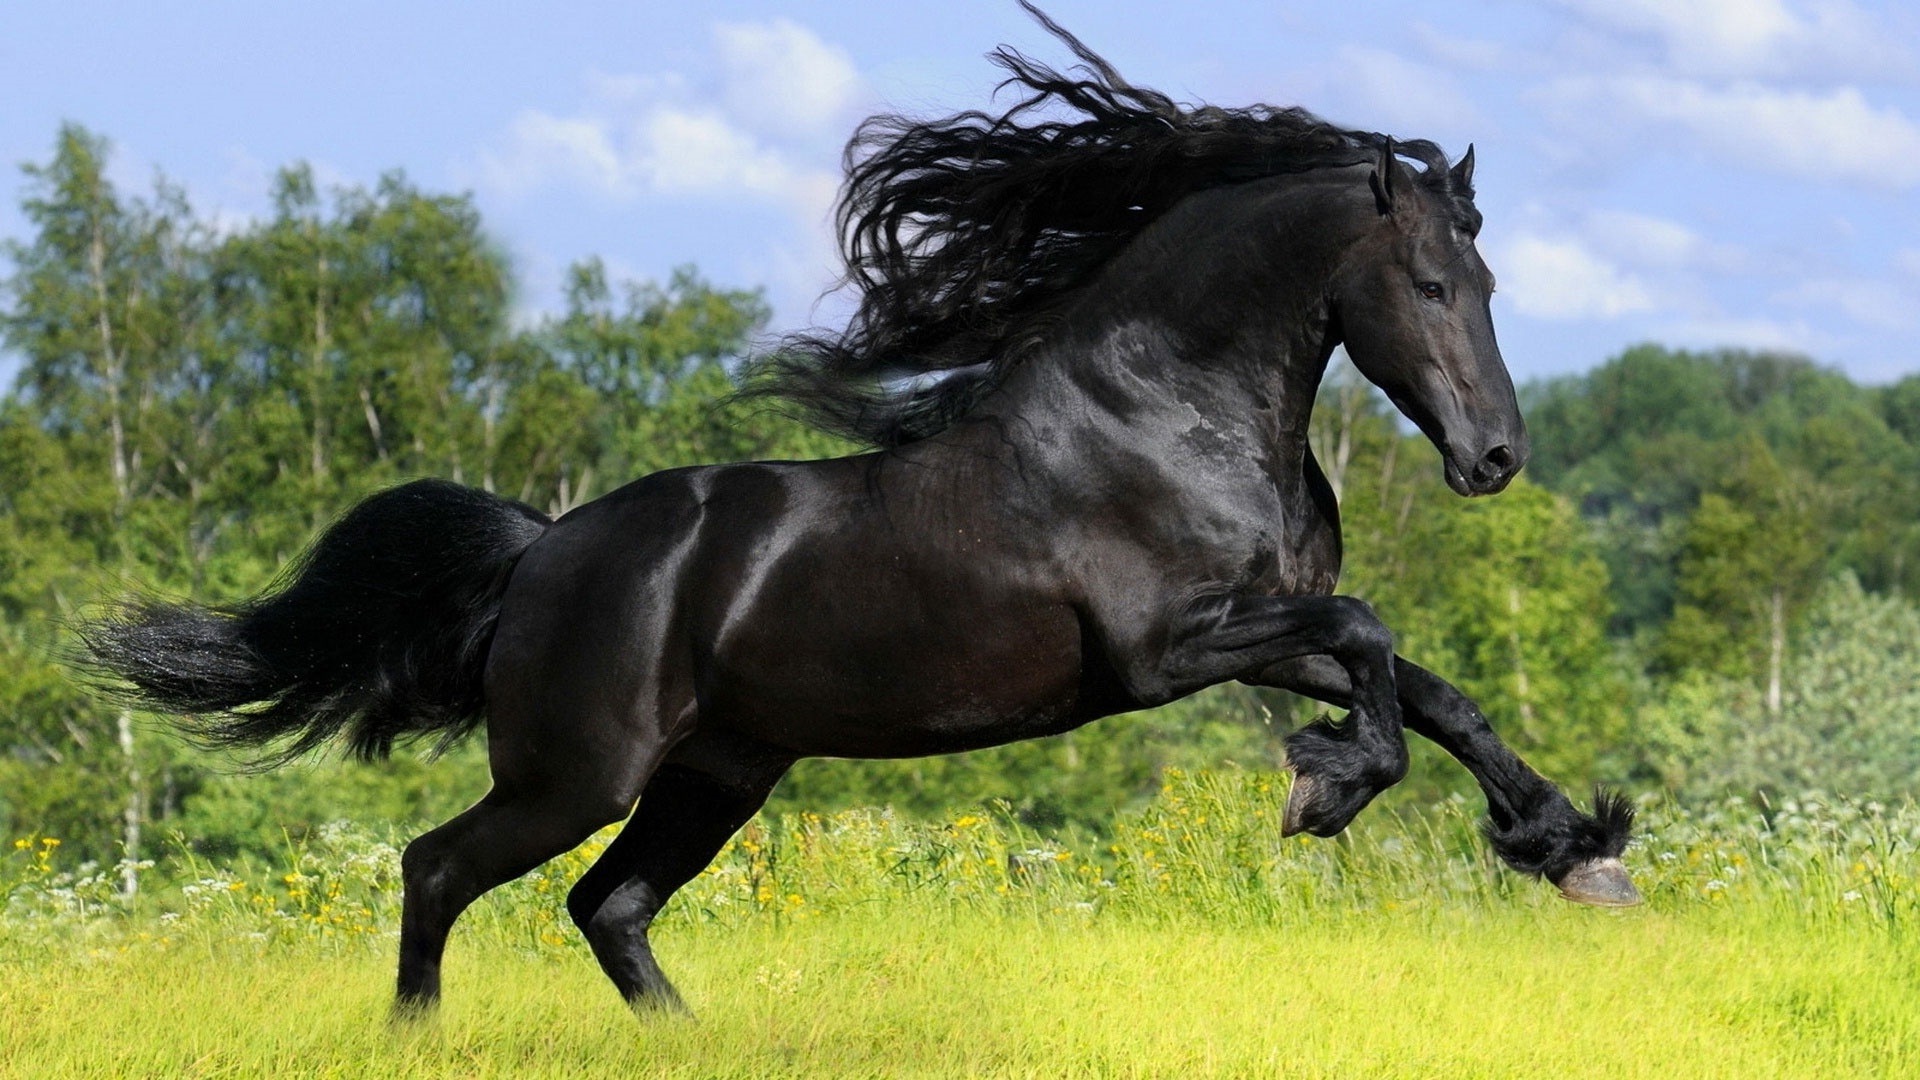 Black Horse best wallpaper